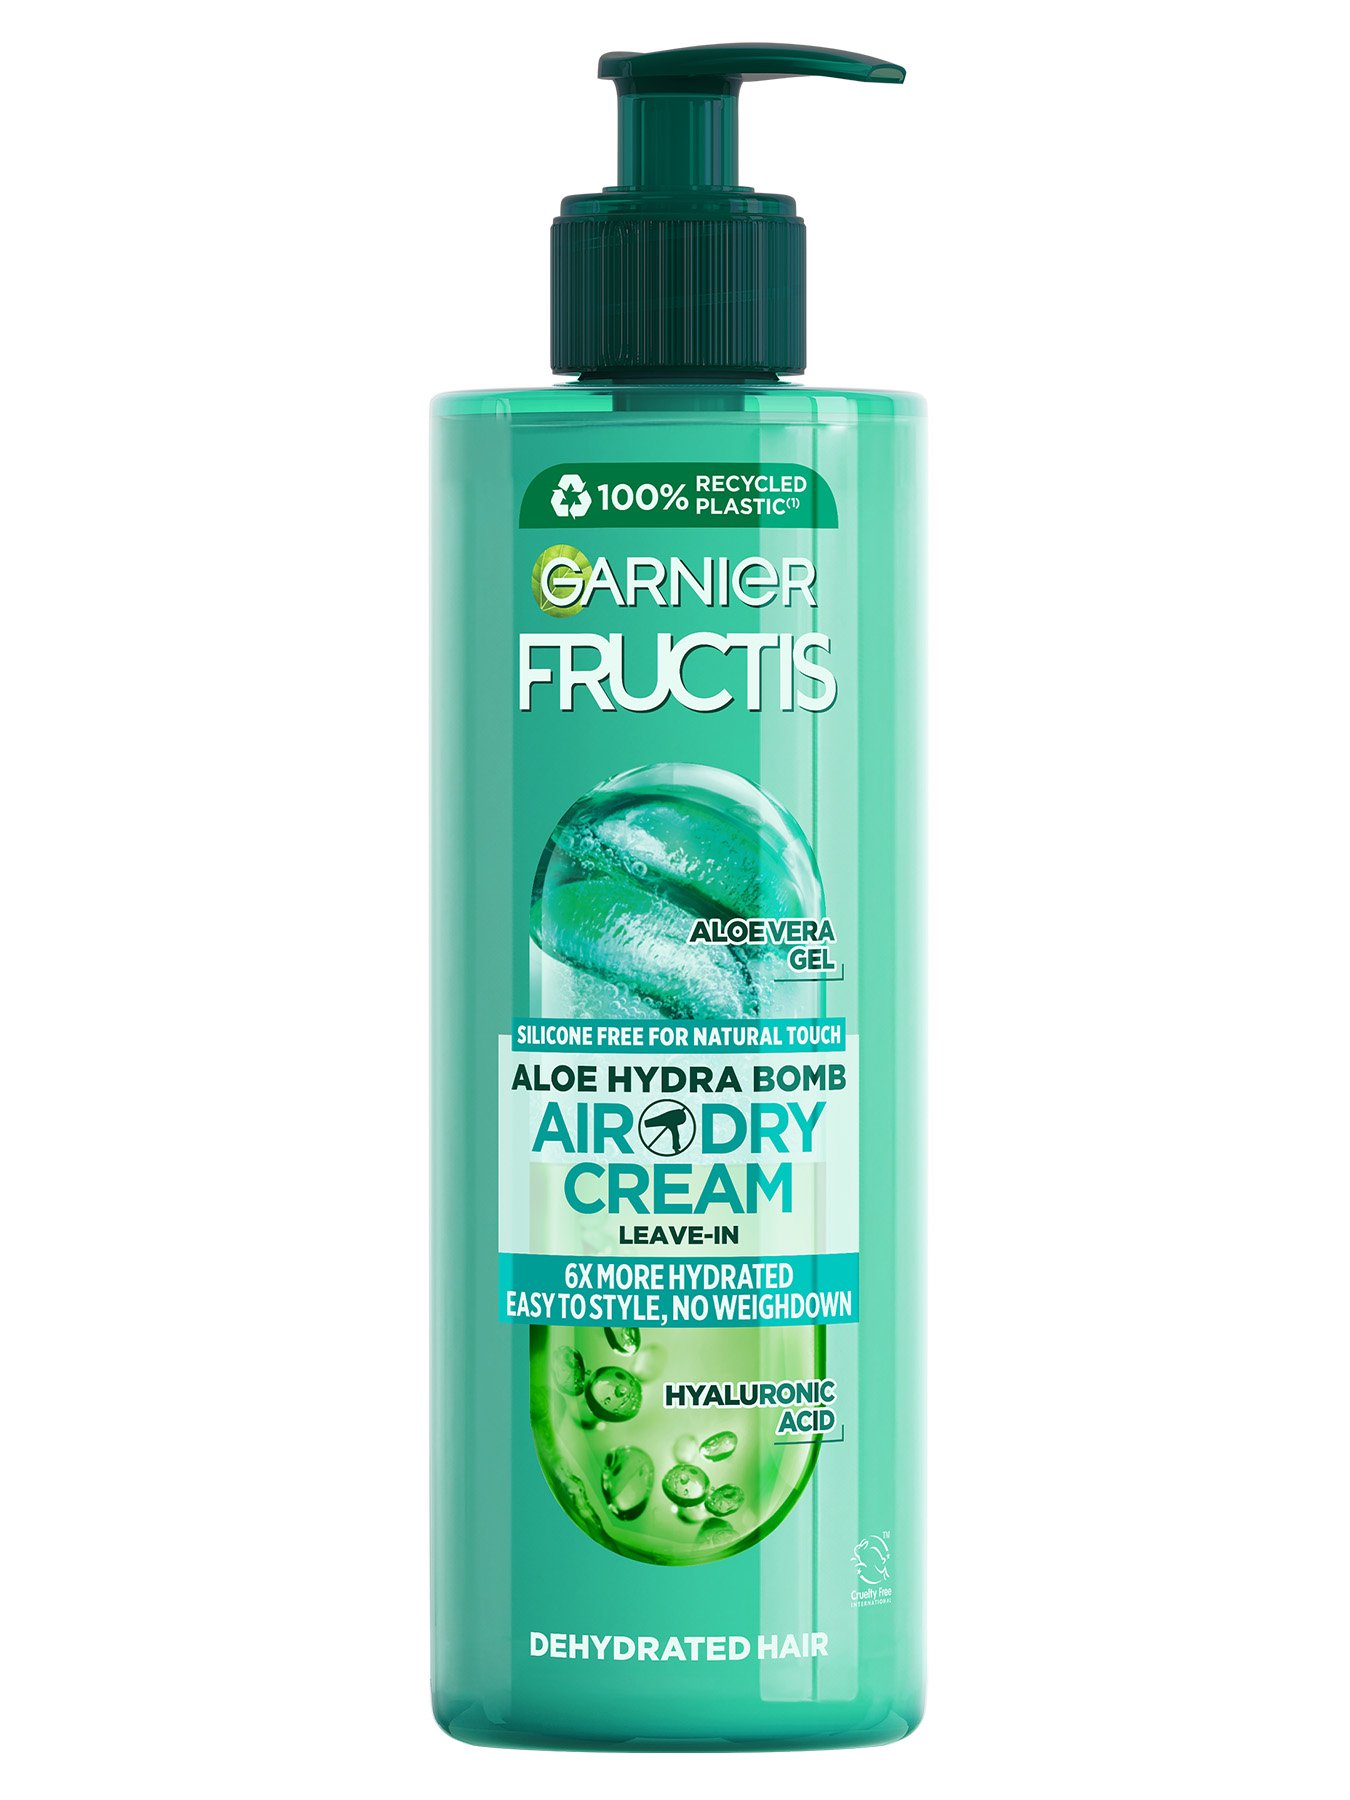 Garnier Fructis Hydra Bomb hair cream